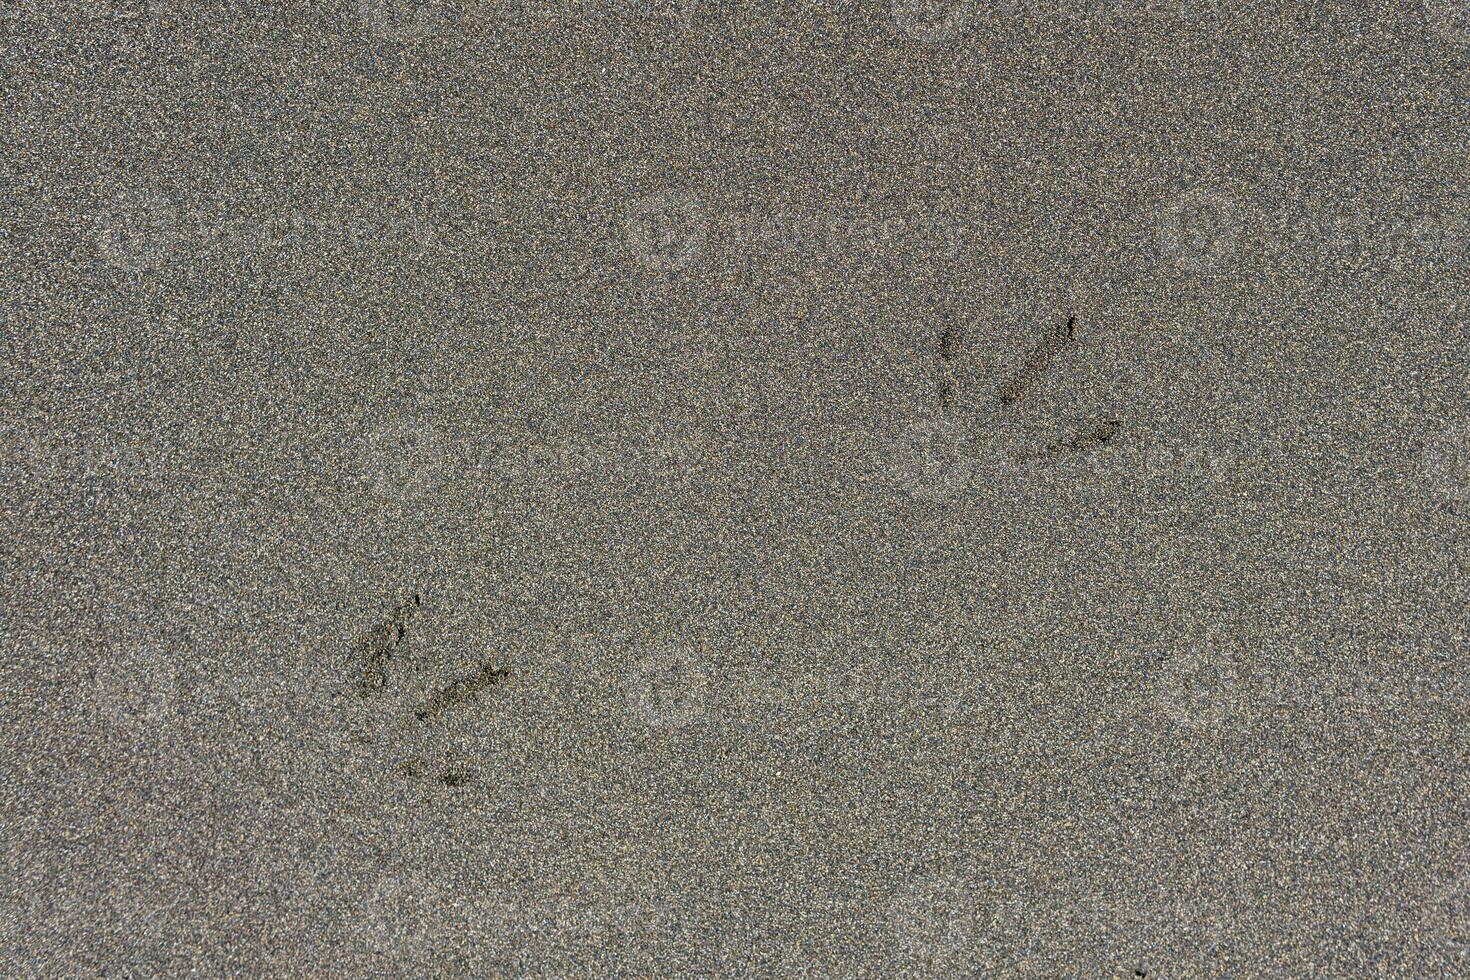 bakgrund, textur - kust sand med fågel Spår foto